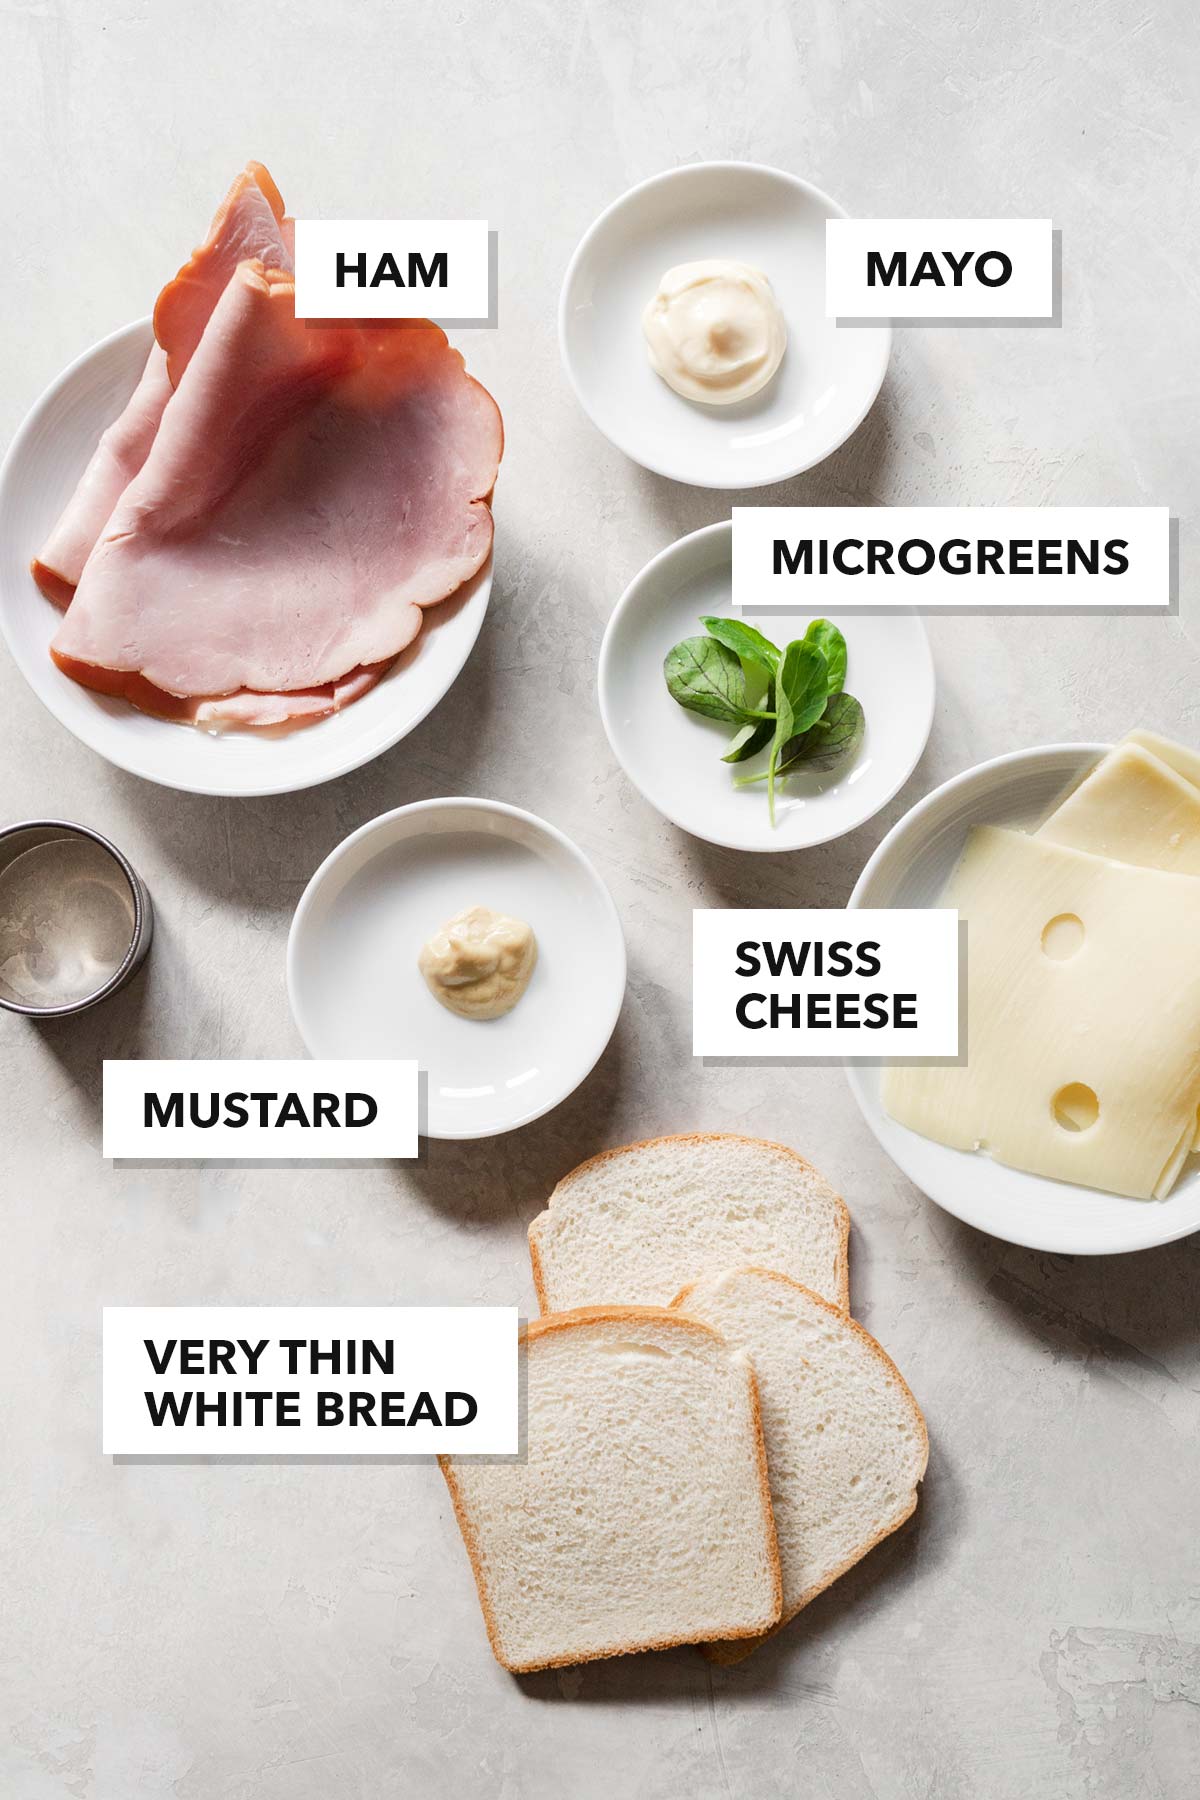 Ham and cheese tea sandwich ingredients.